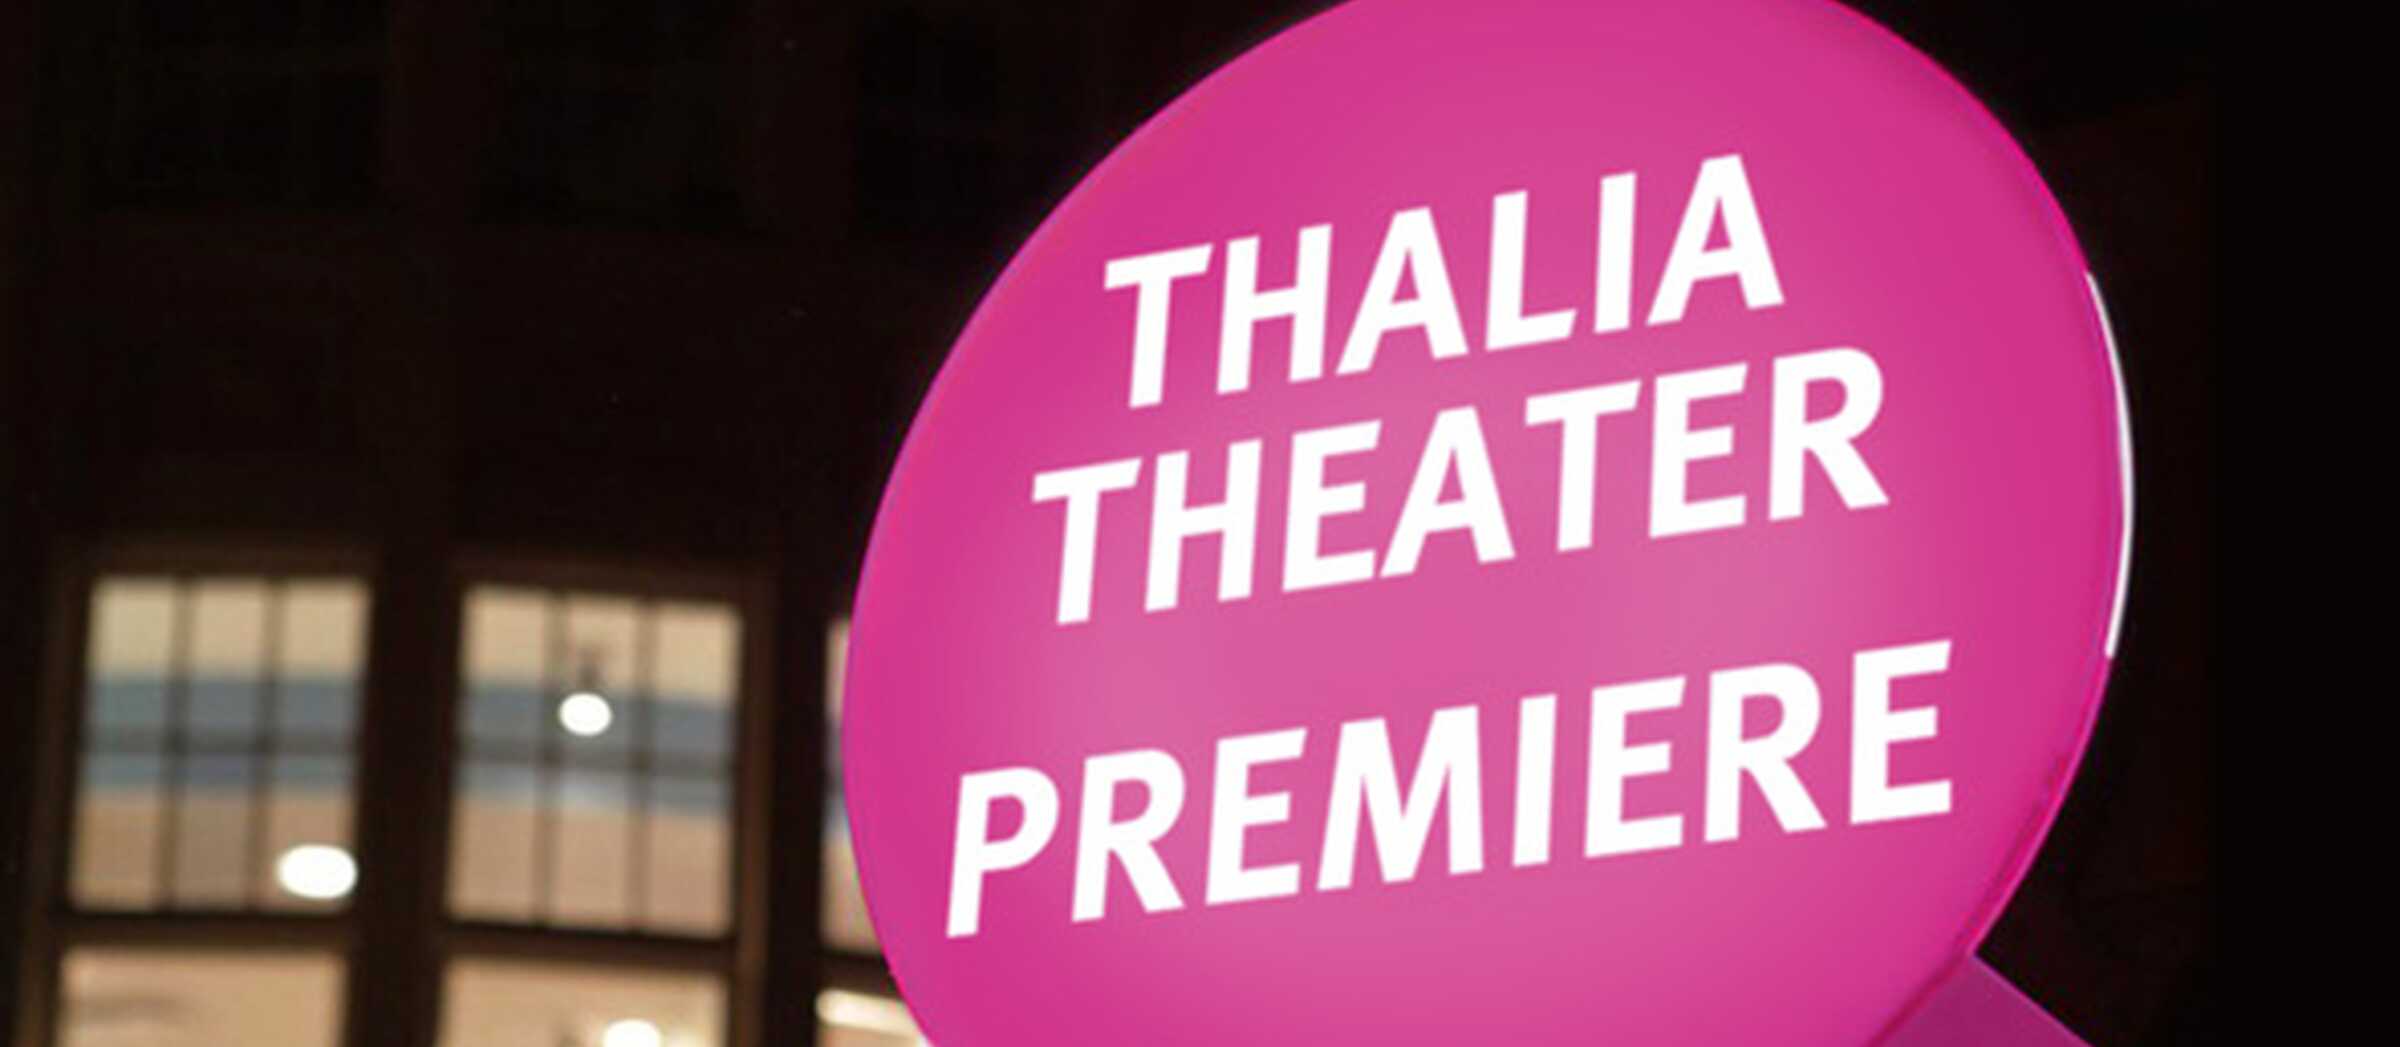 Thalia Theater Premiere